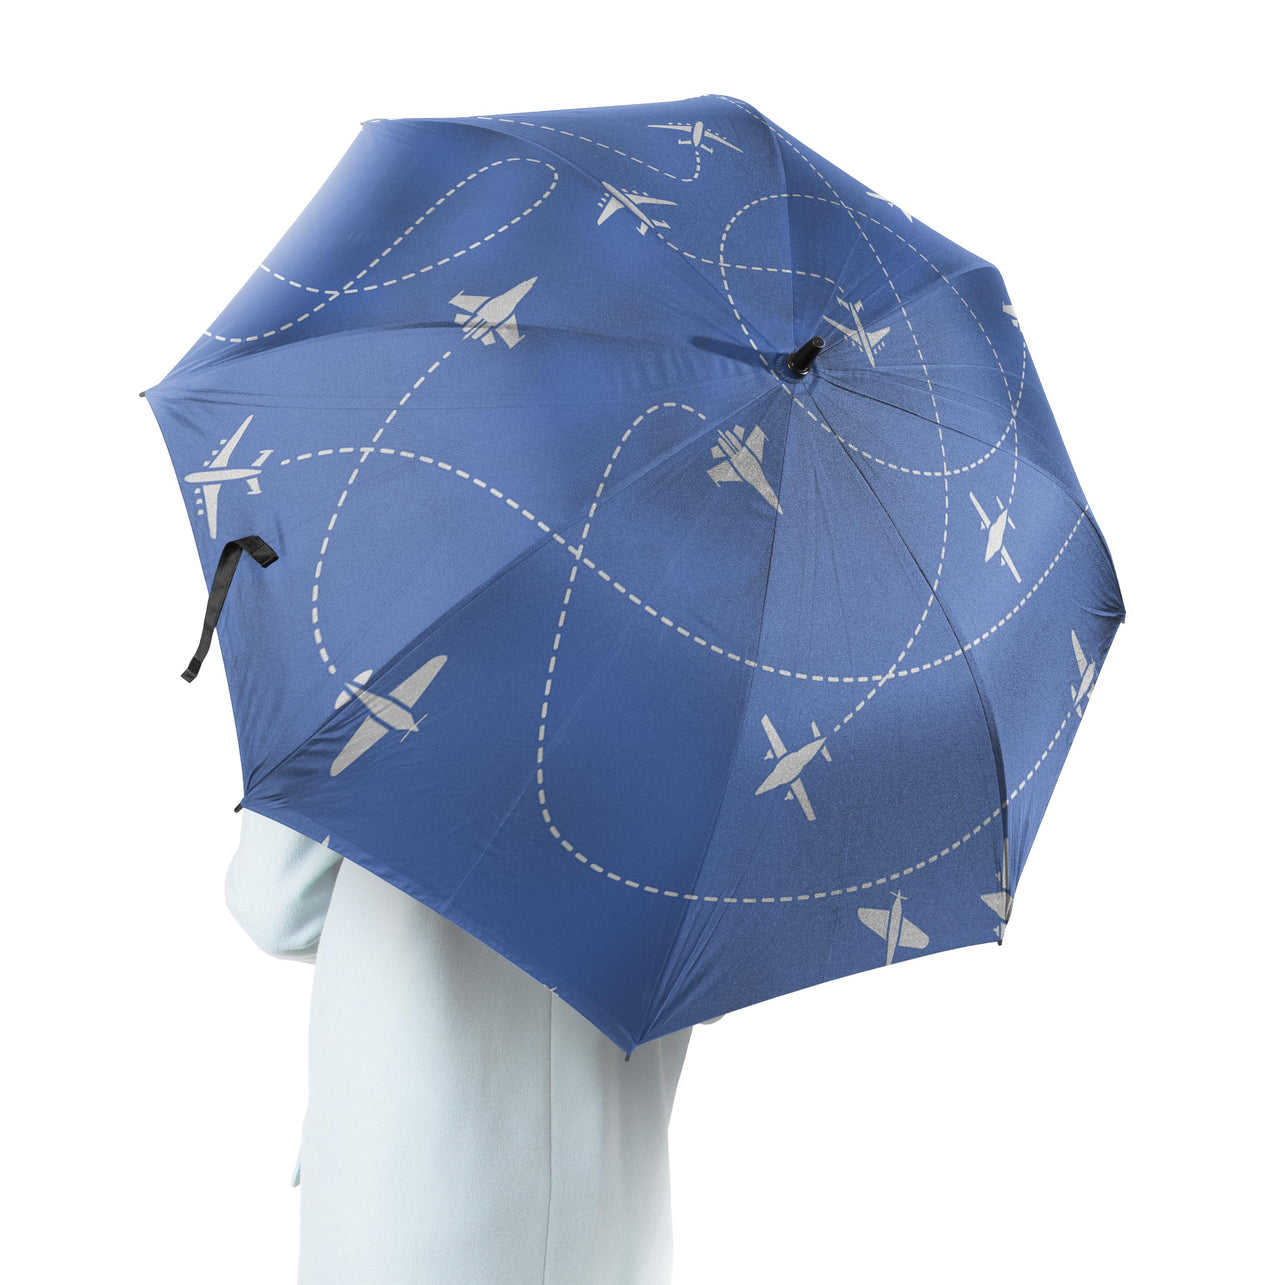 Travel The World By Plane (Blue) Designed Umbrella